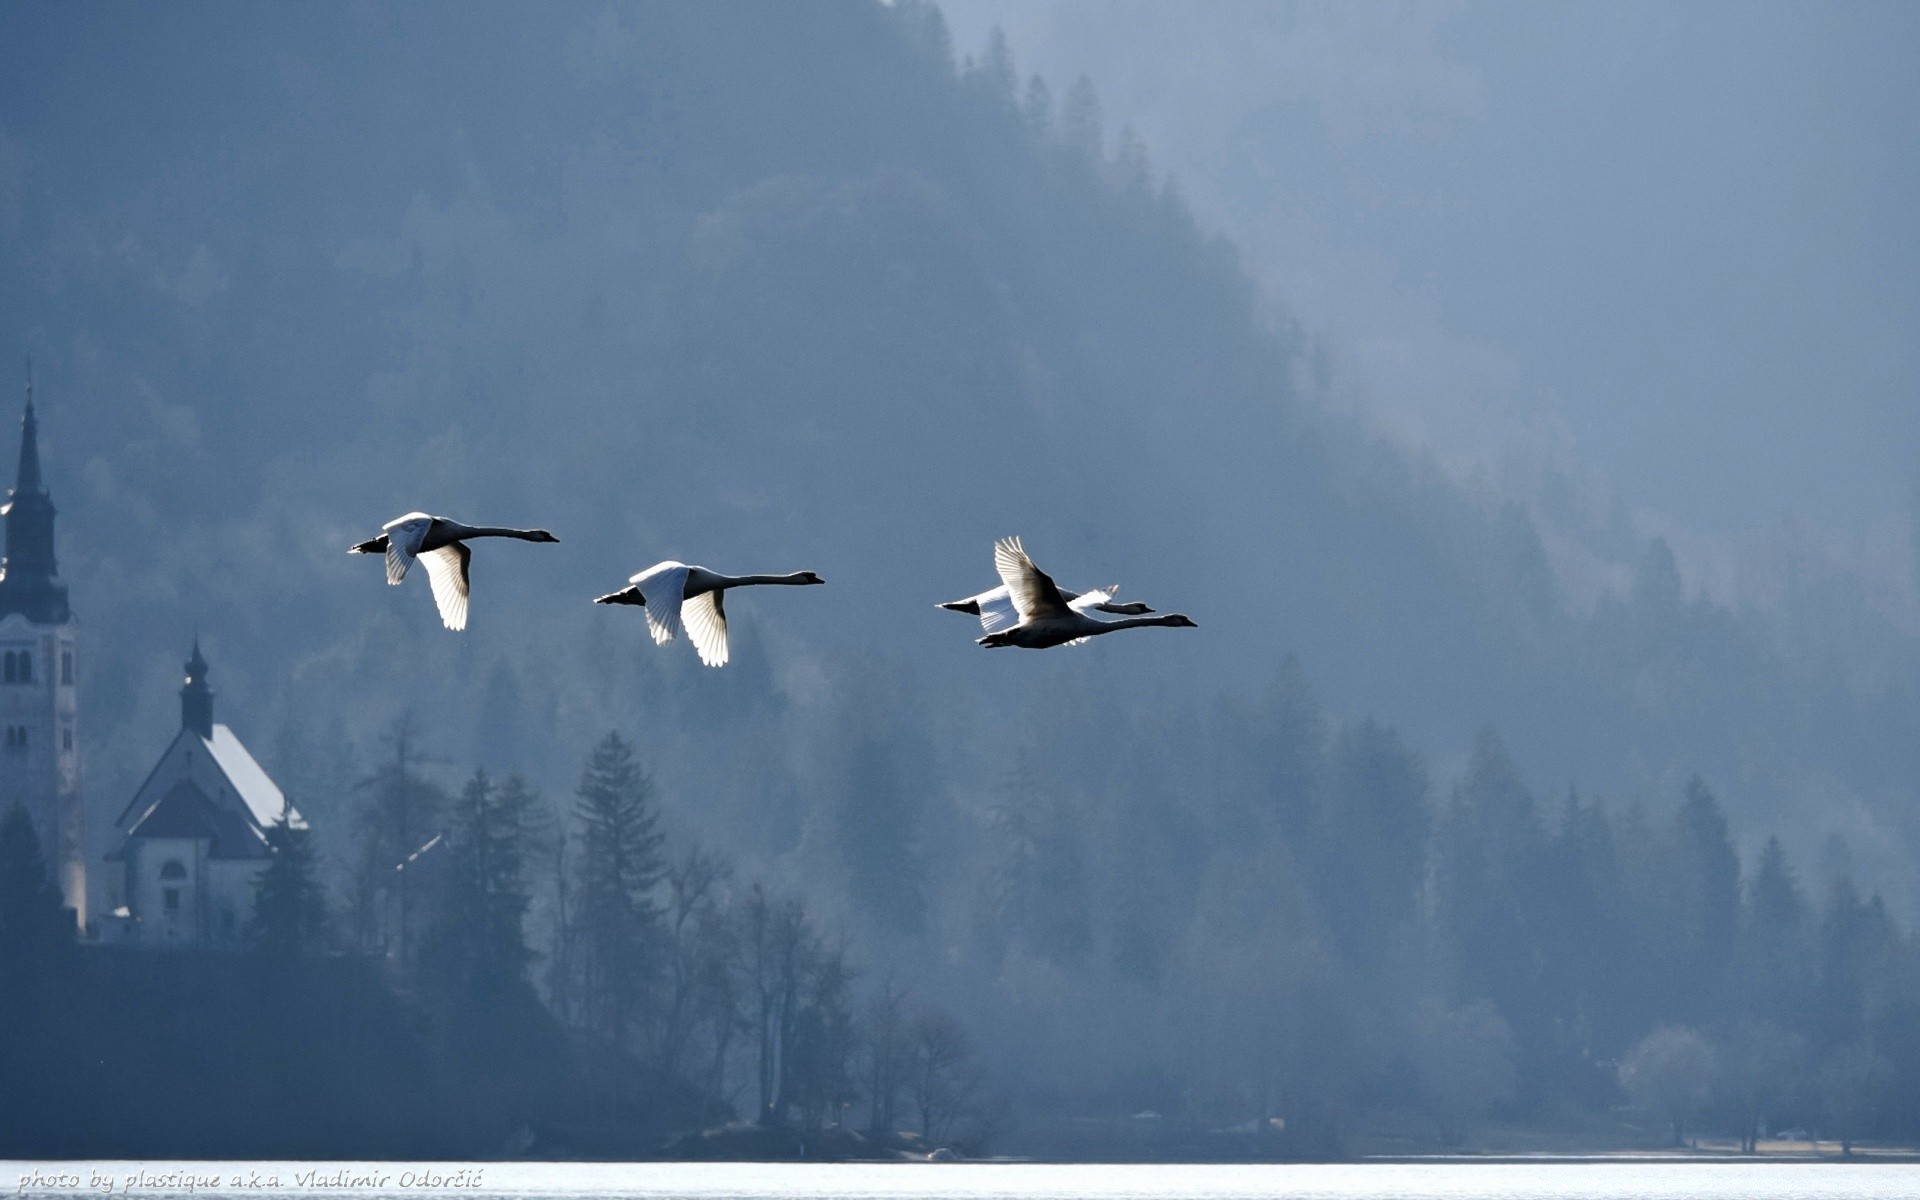 lake bird wildlife winter snow water sky nature outdoors seagulls flight waterfowl goose landscape